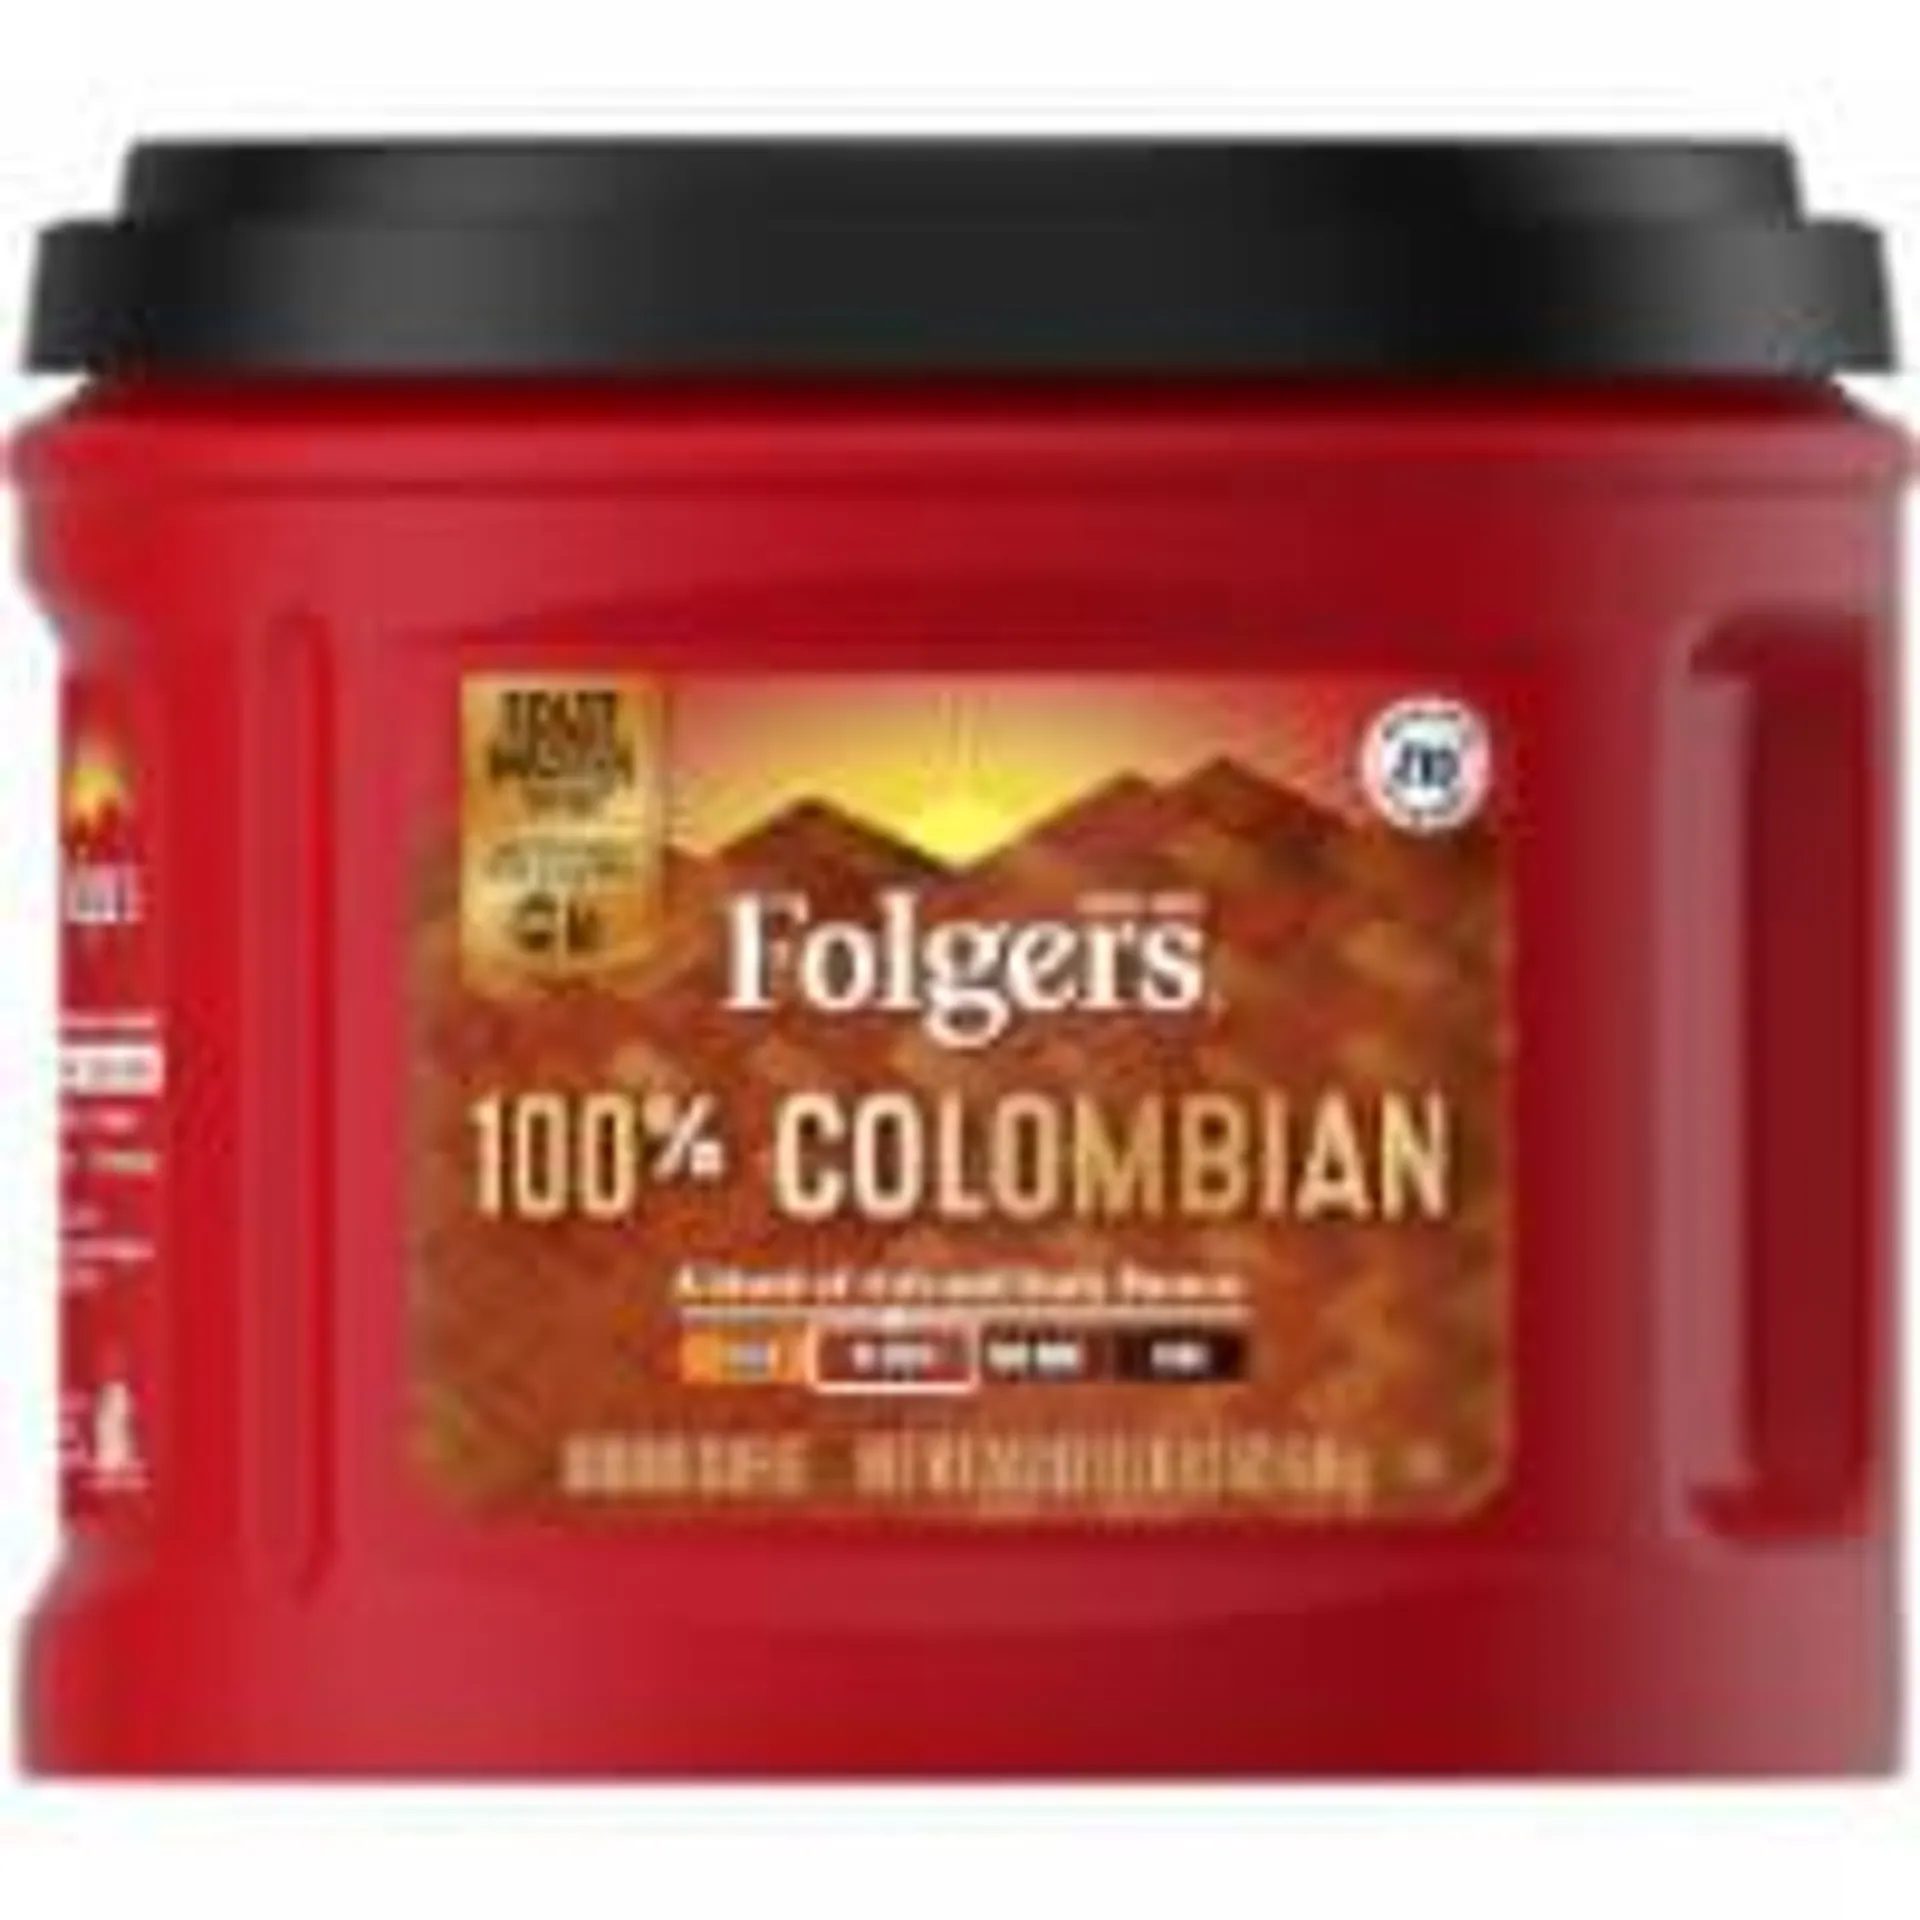 Folgers 100% Colombian Medium Ground Coffee